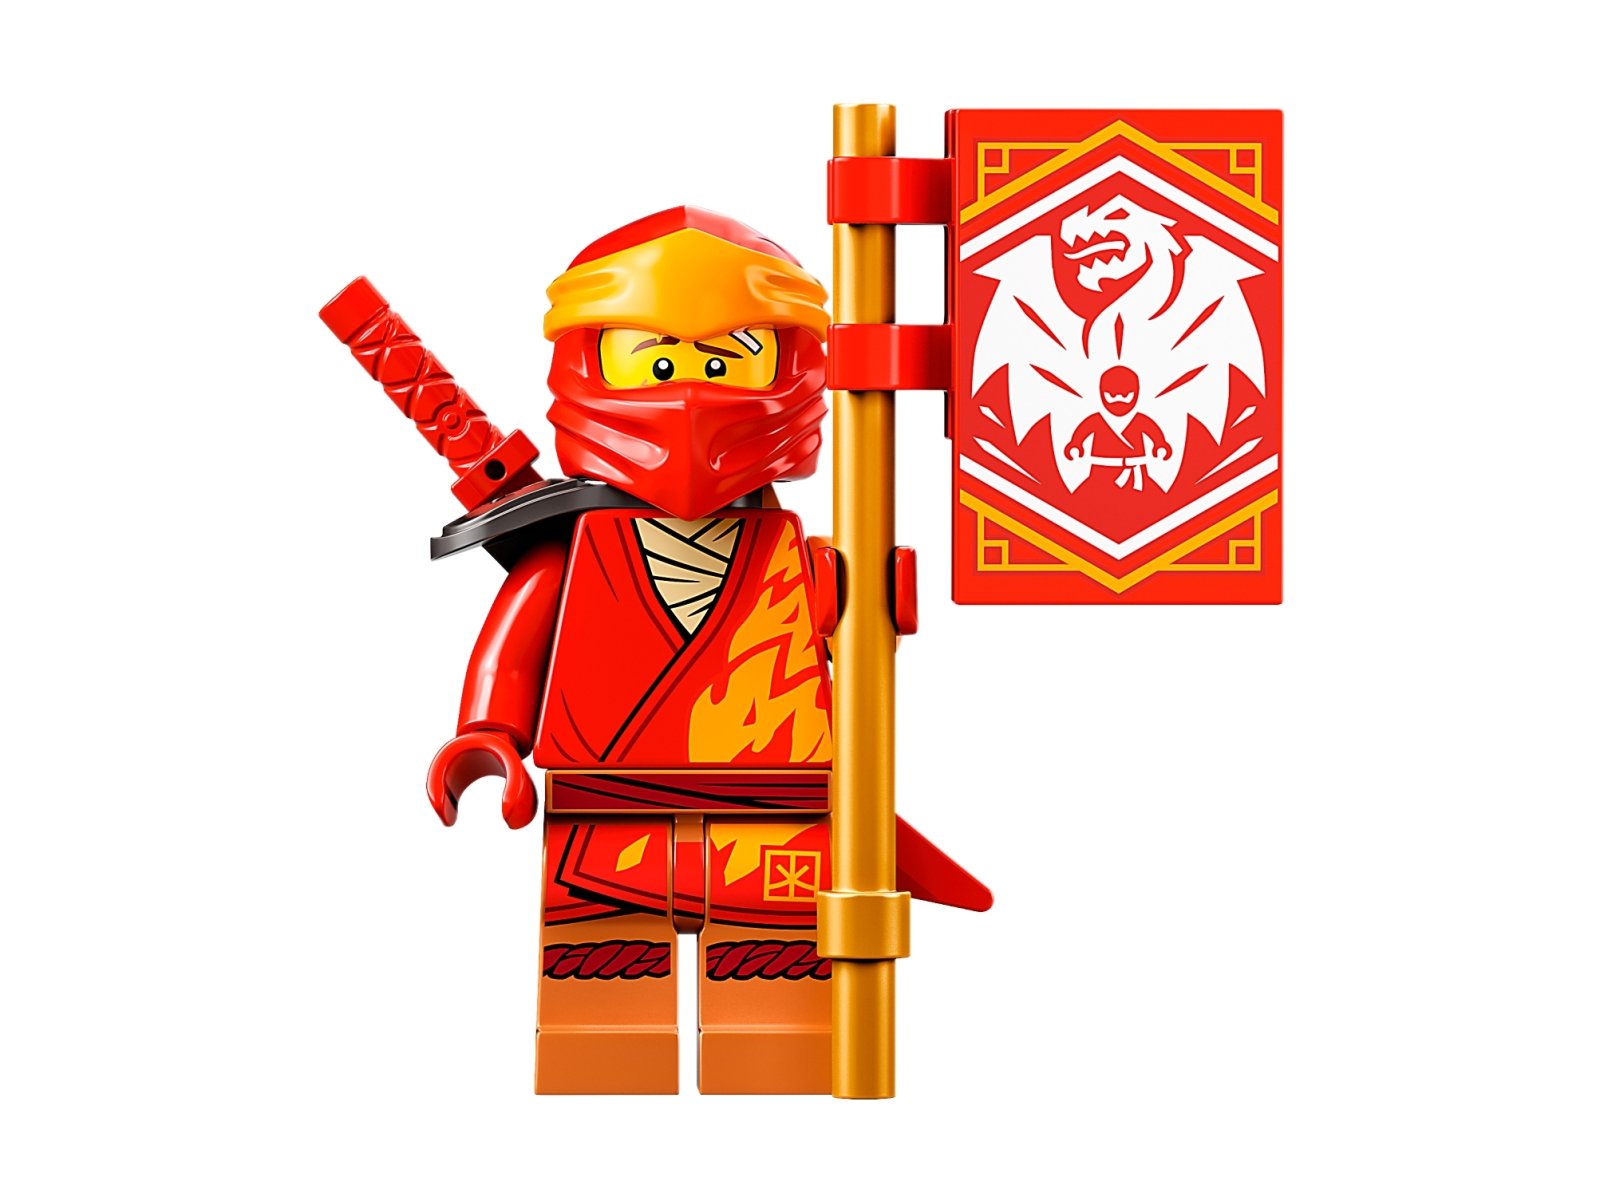 LEGO Ninjago Smok ognia Kaia EVO 71762